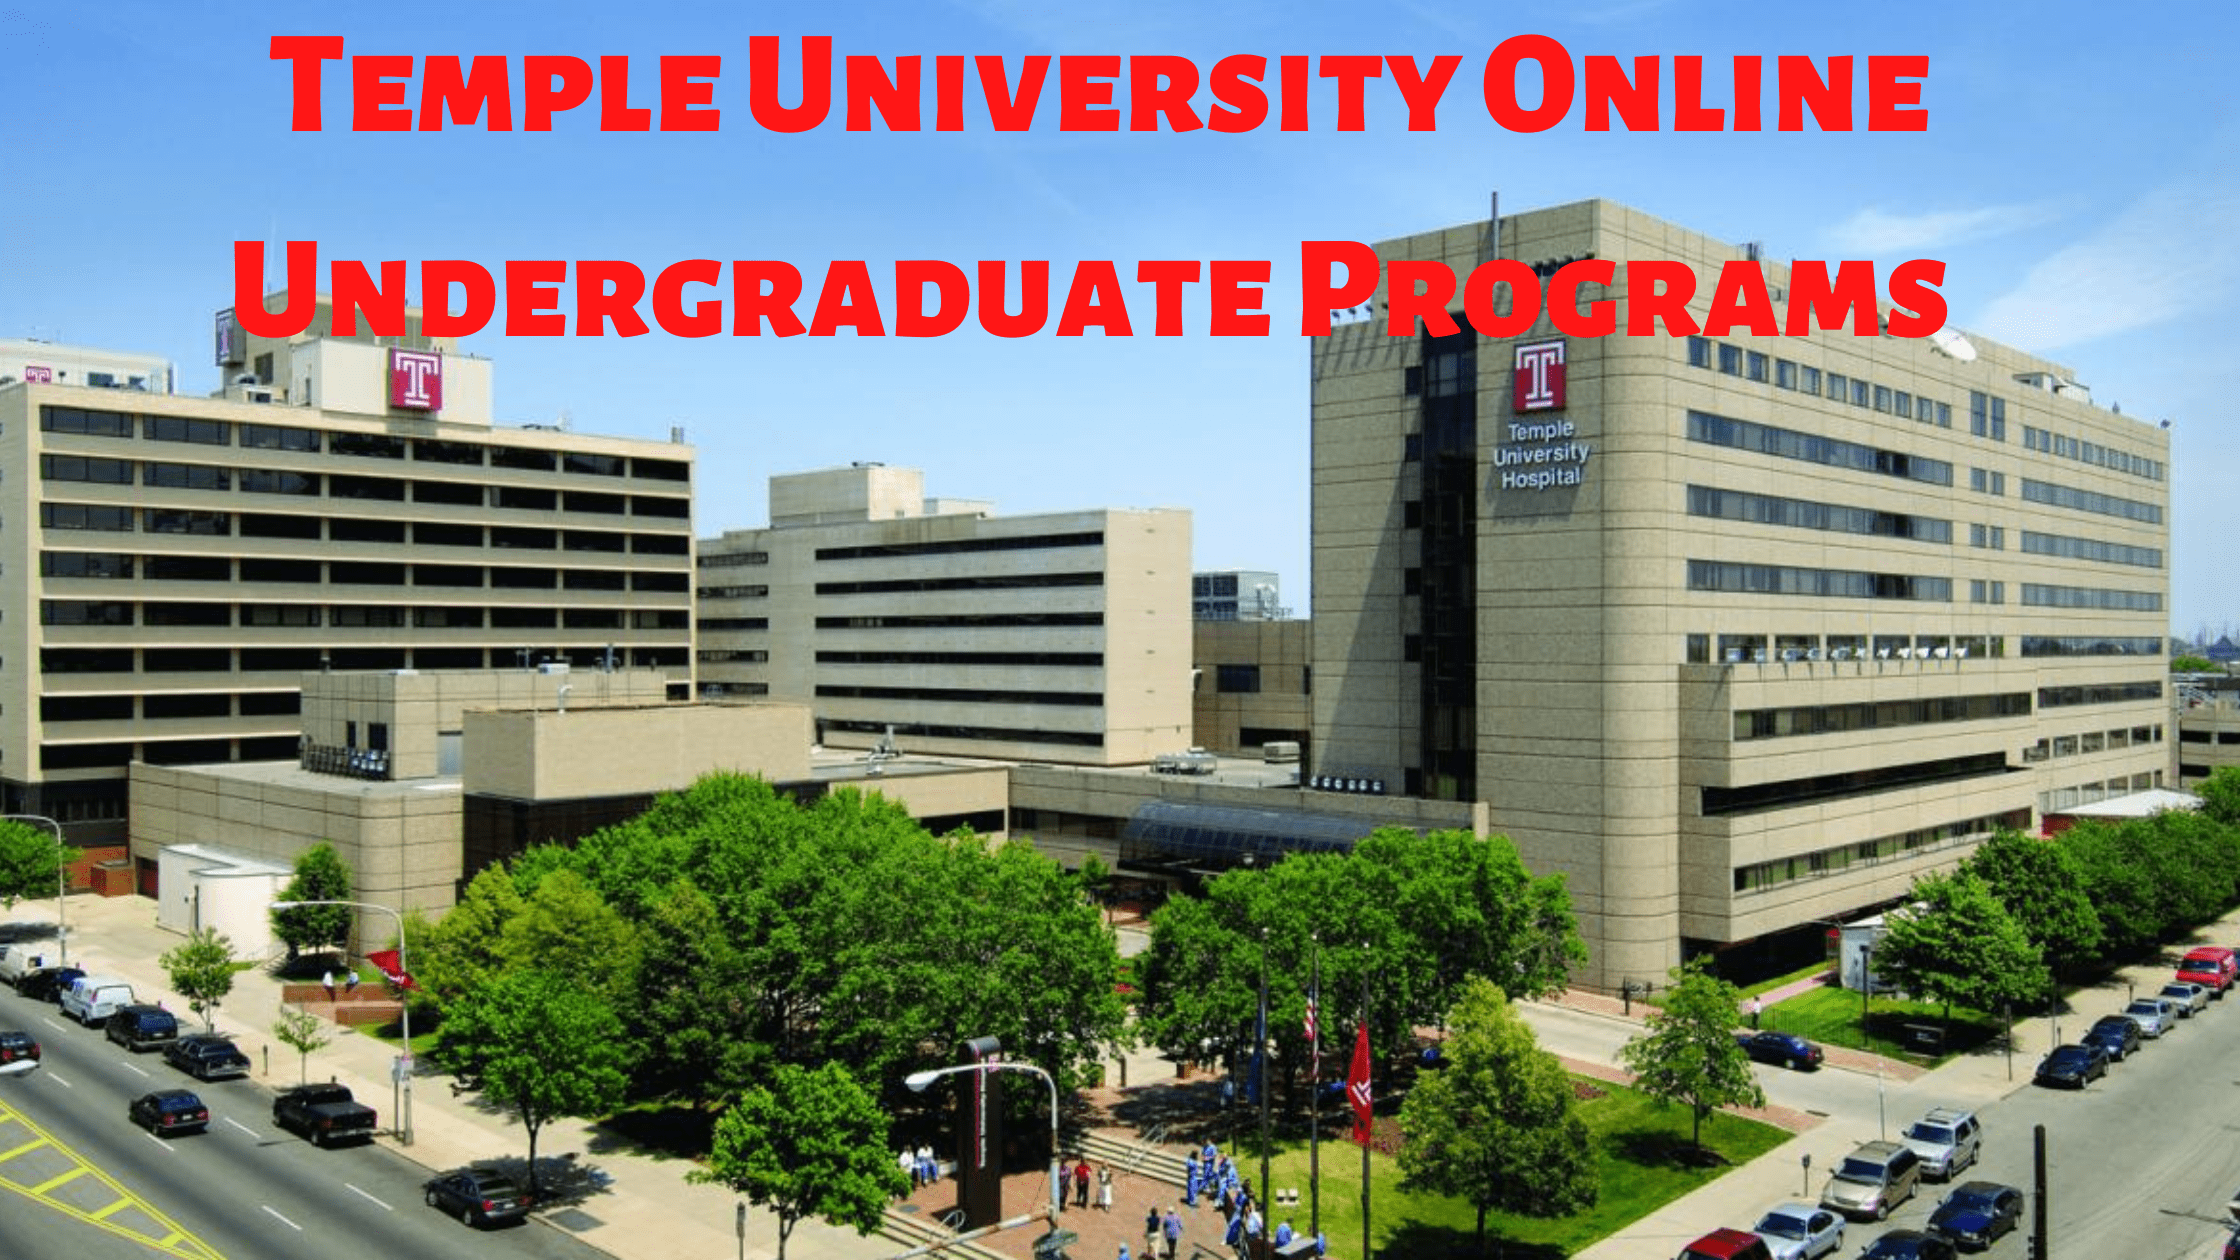 7 Best Temple University Online Undergraduate Programs Study Online